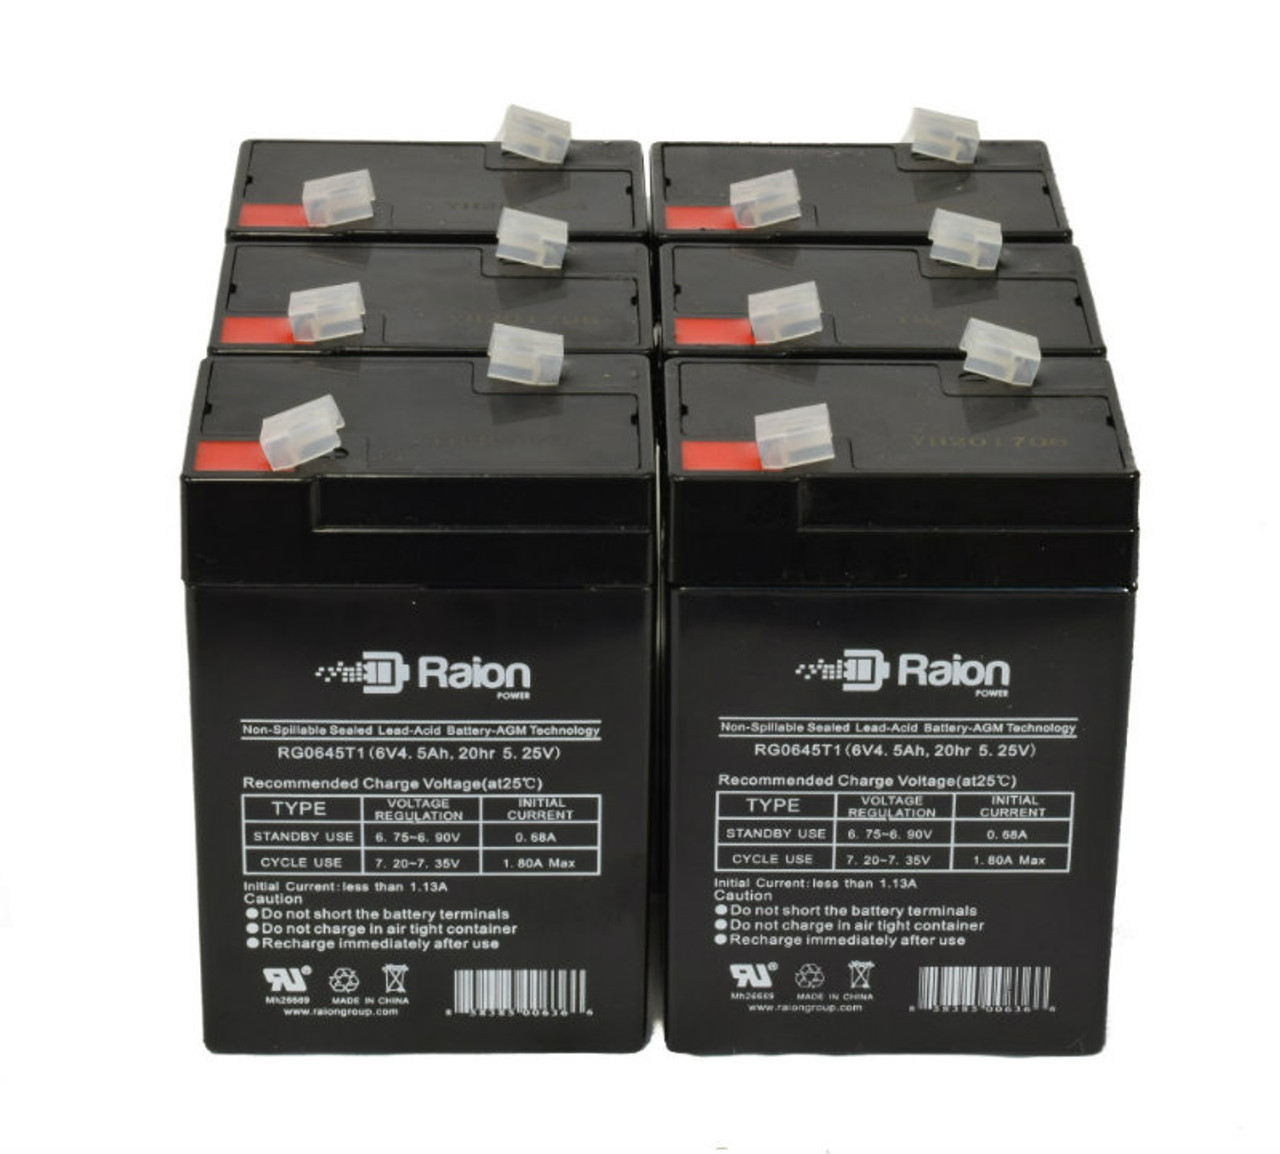 Raion Power 6V 4.5Ah Replacement Emergency Light Battery for Sonnenschein A50642S - 6 Pack